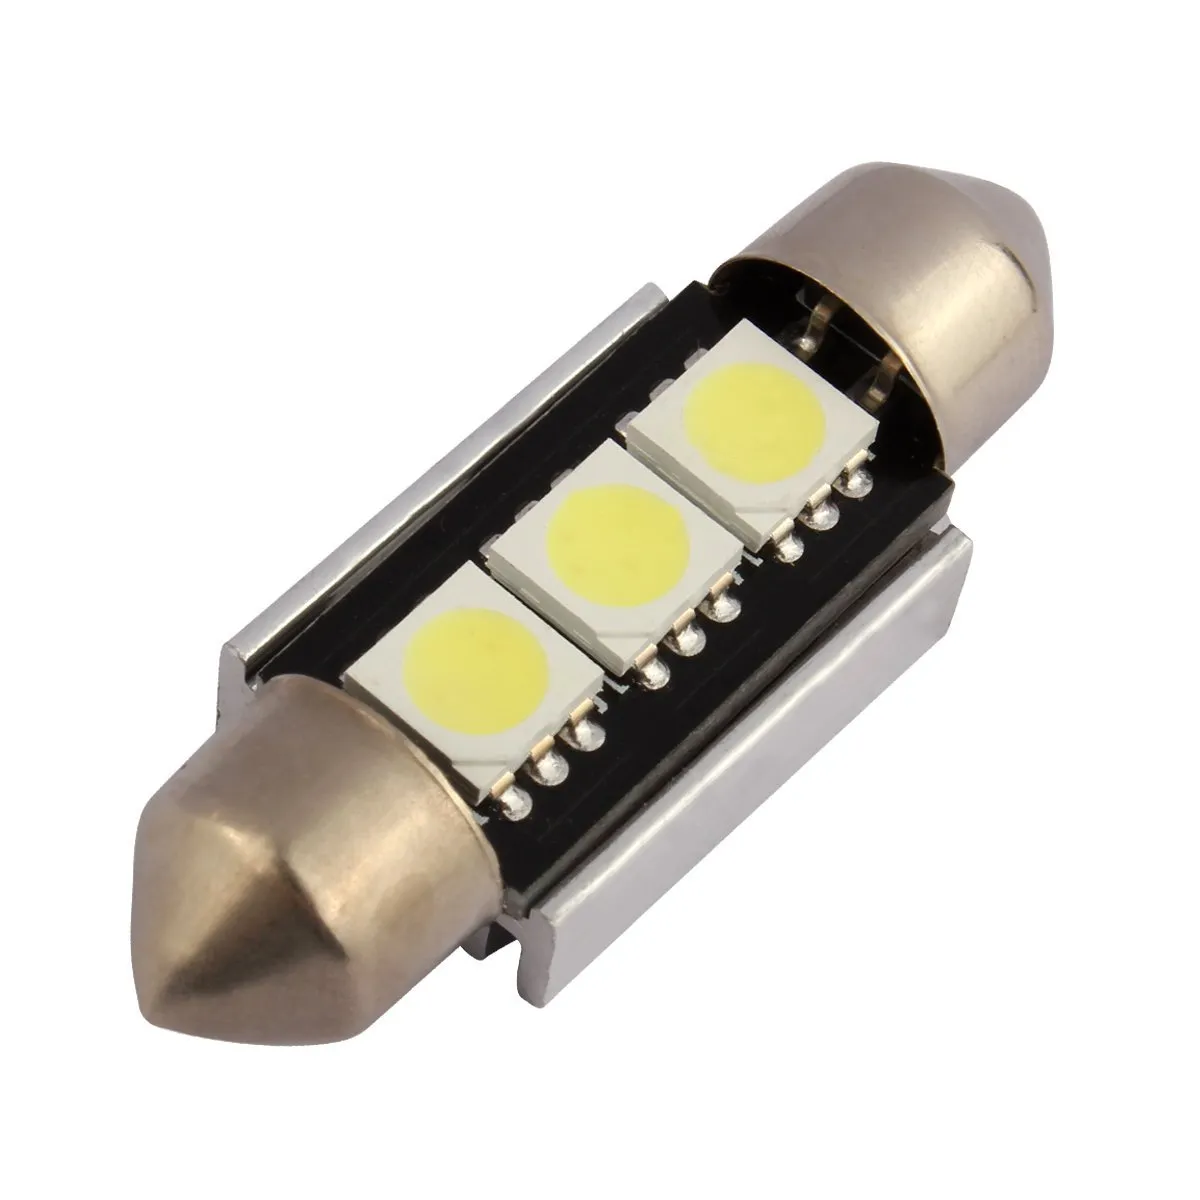 Lighting Bulbs xenon white 36mm/39mm Canbus Error-Free C5W 239LED 3SMDs 5050 Festoon dome reading led Light